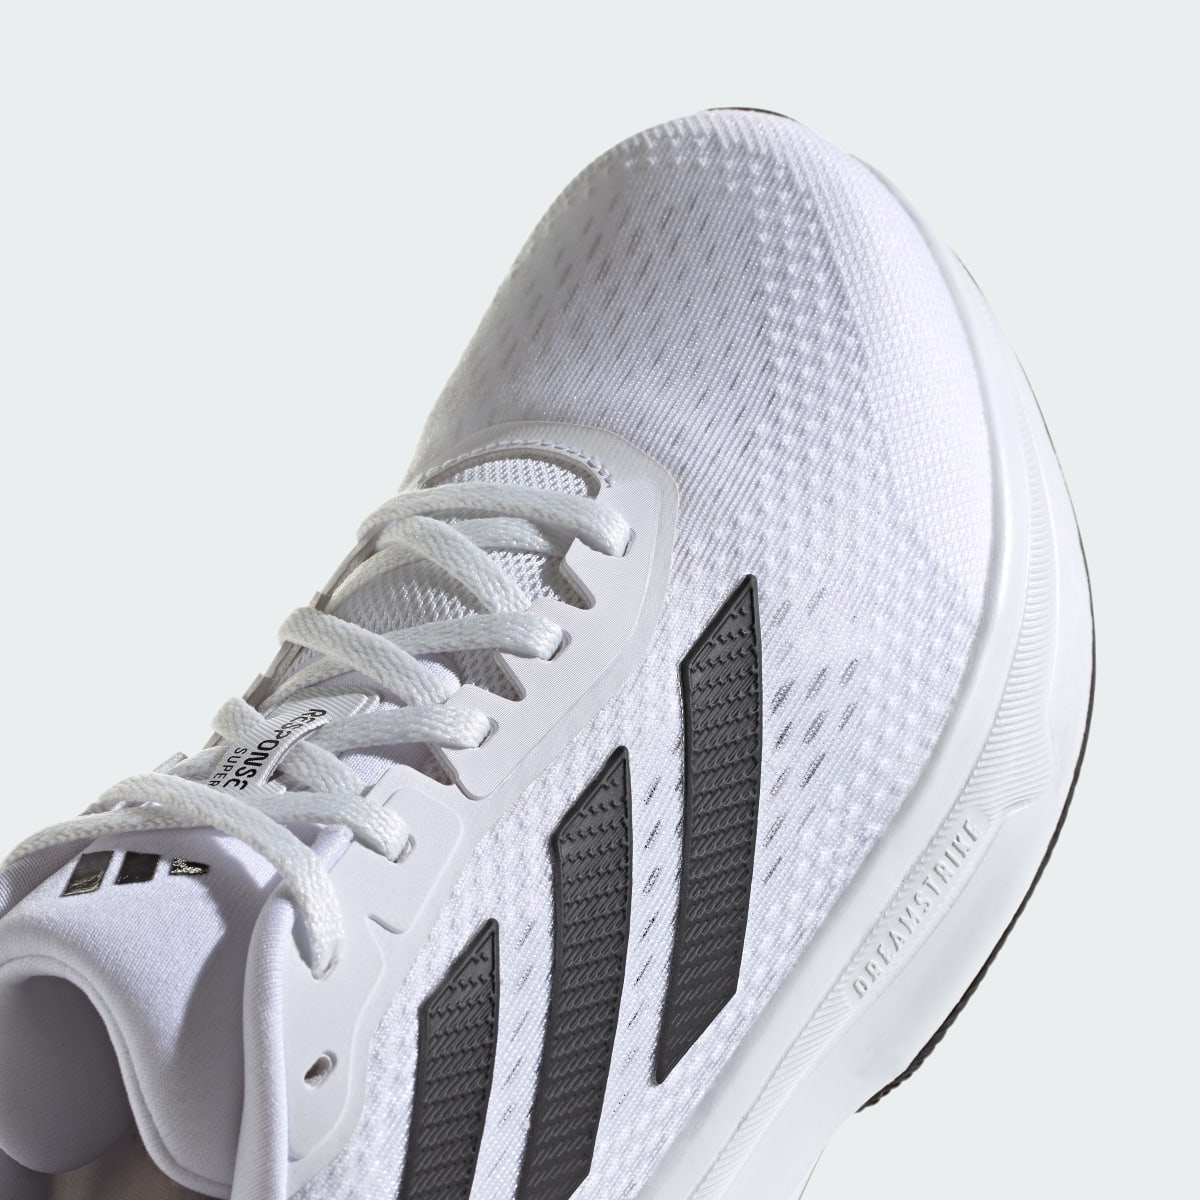 Adidas Scarpe Response Super. 10